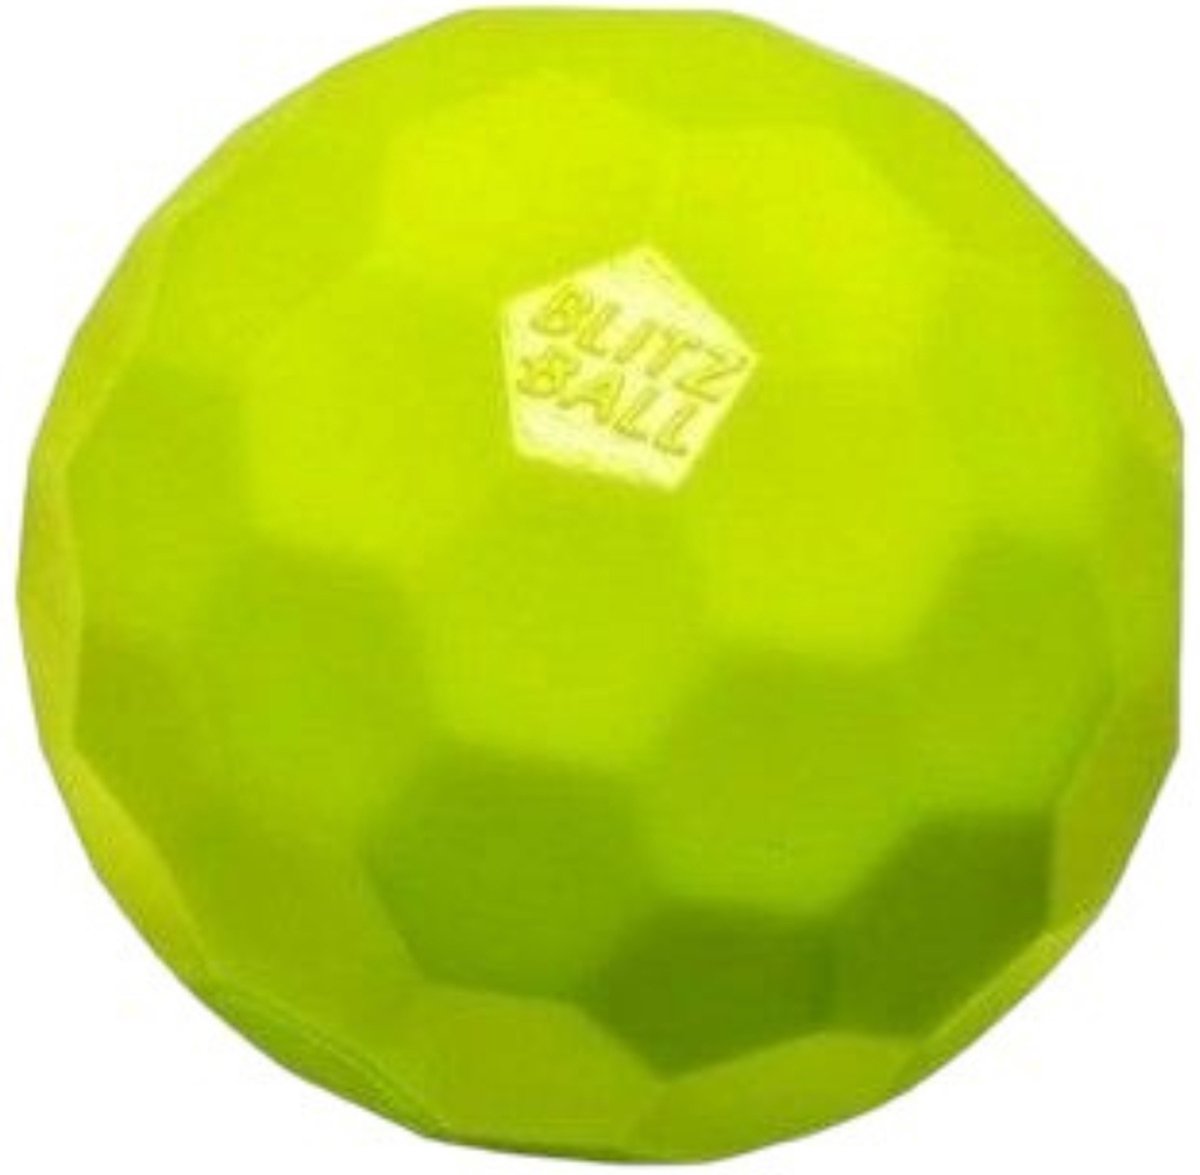 Blitzball - Single Ball